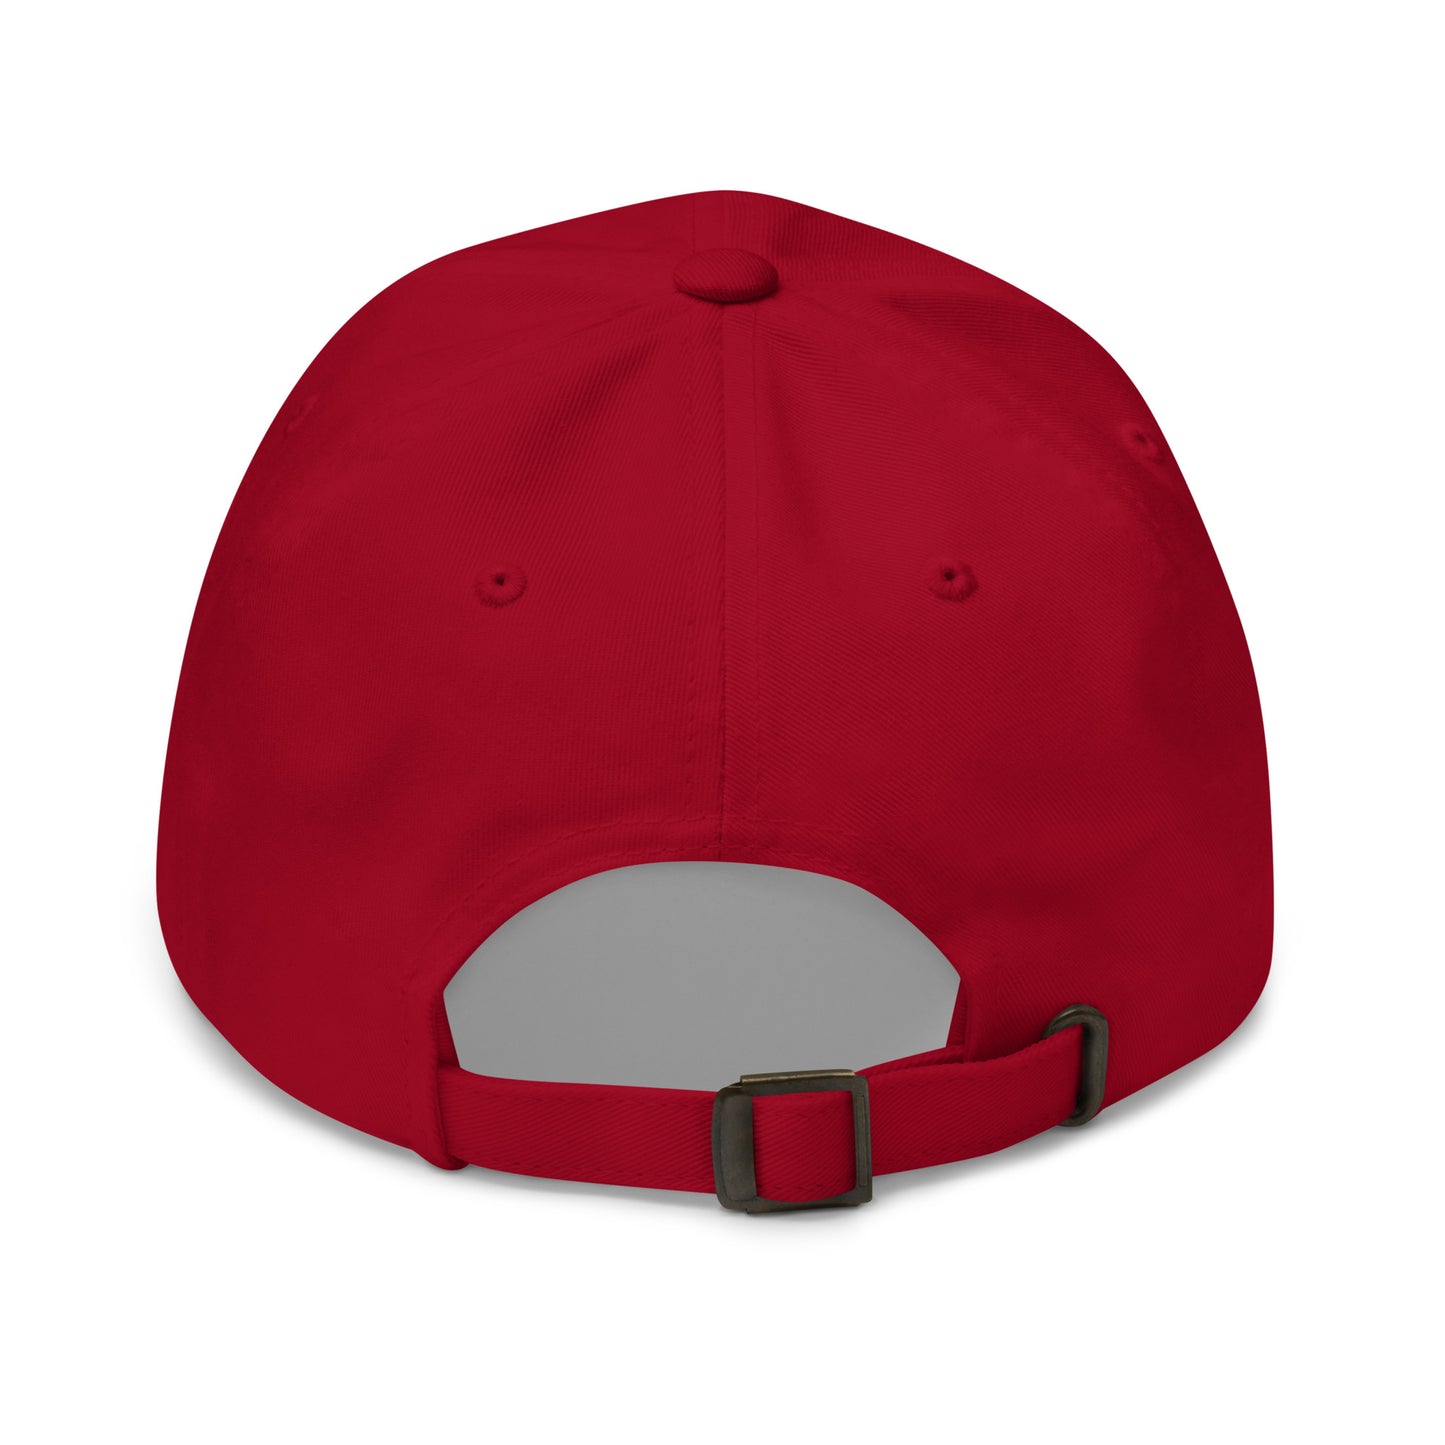 Dad hat. PYAMA Red